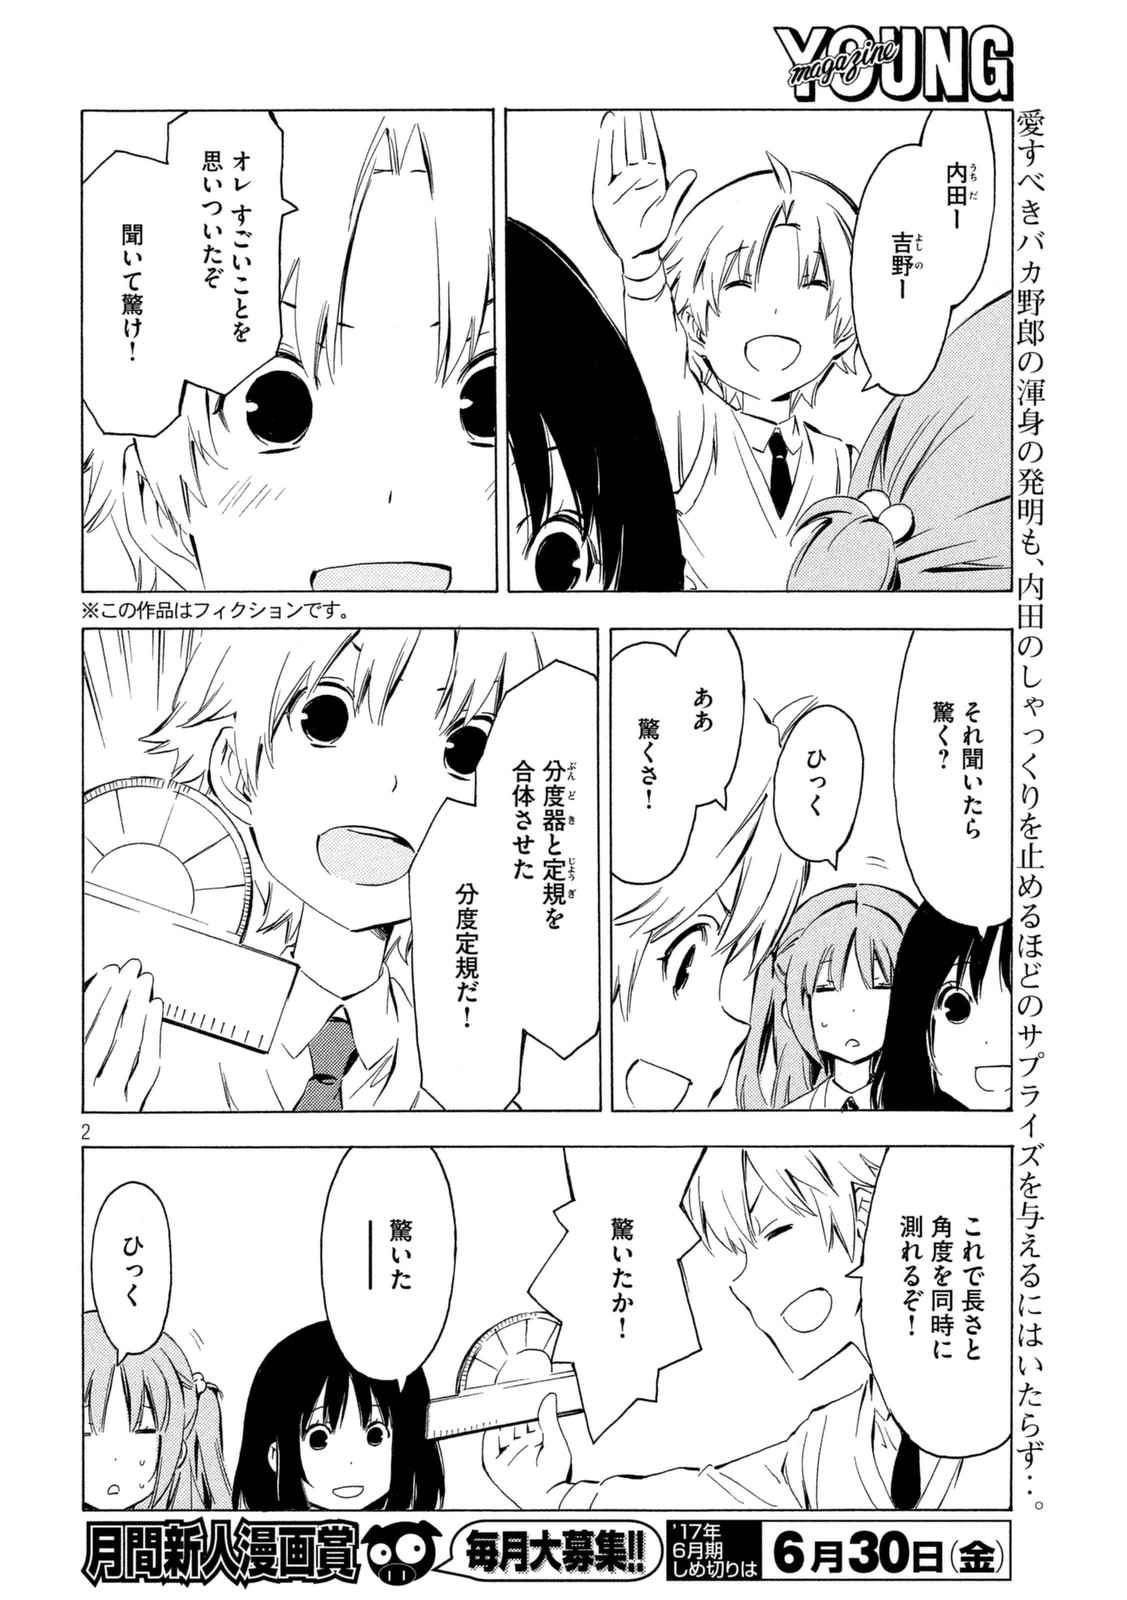 Minami-ke - Chapter 318 - Page 2